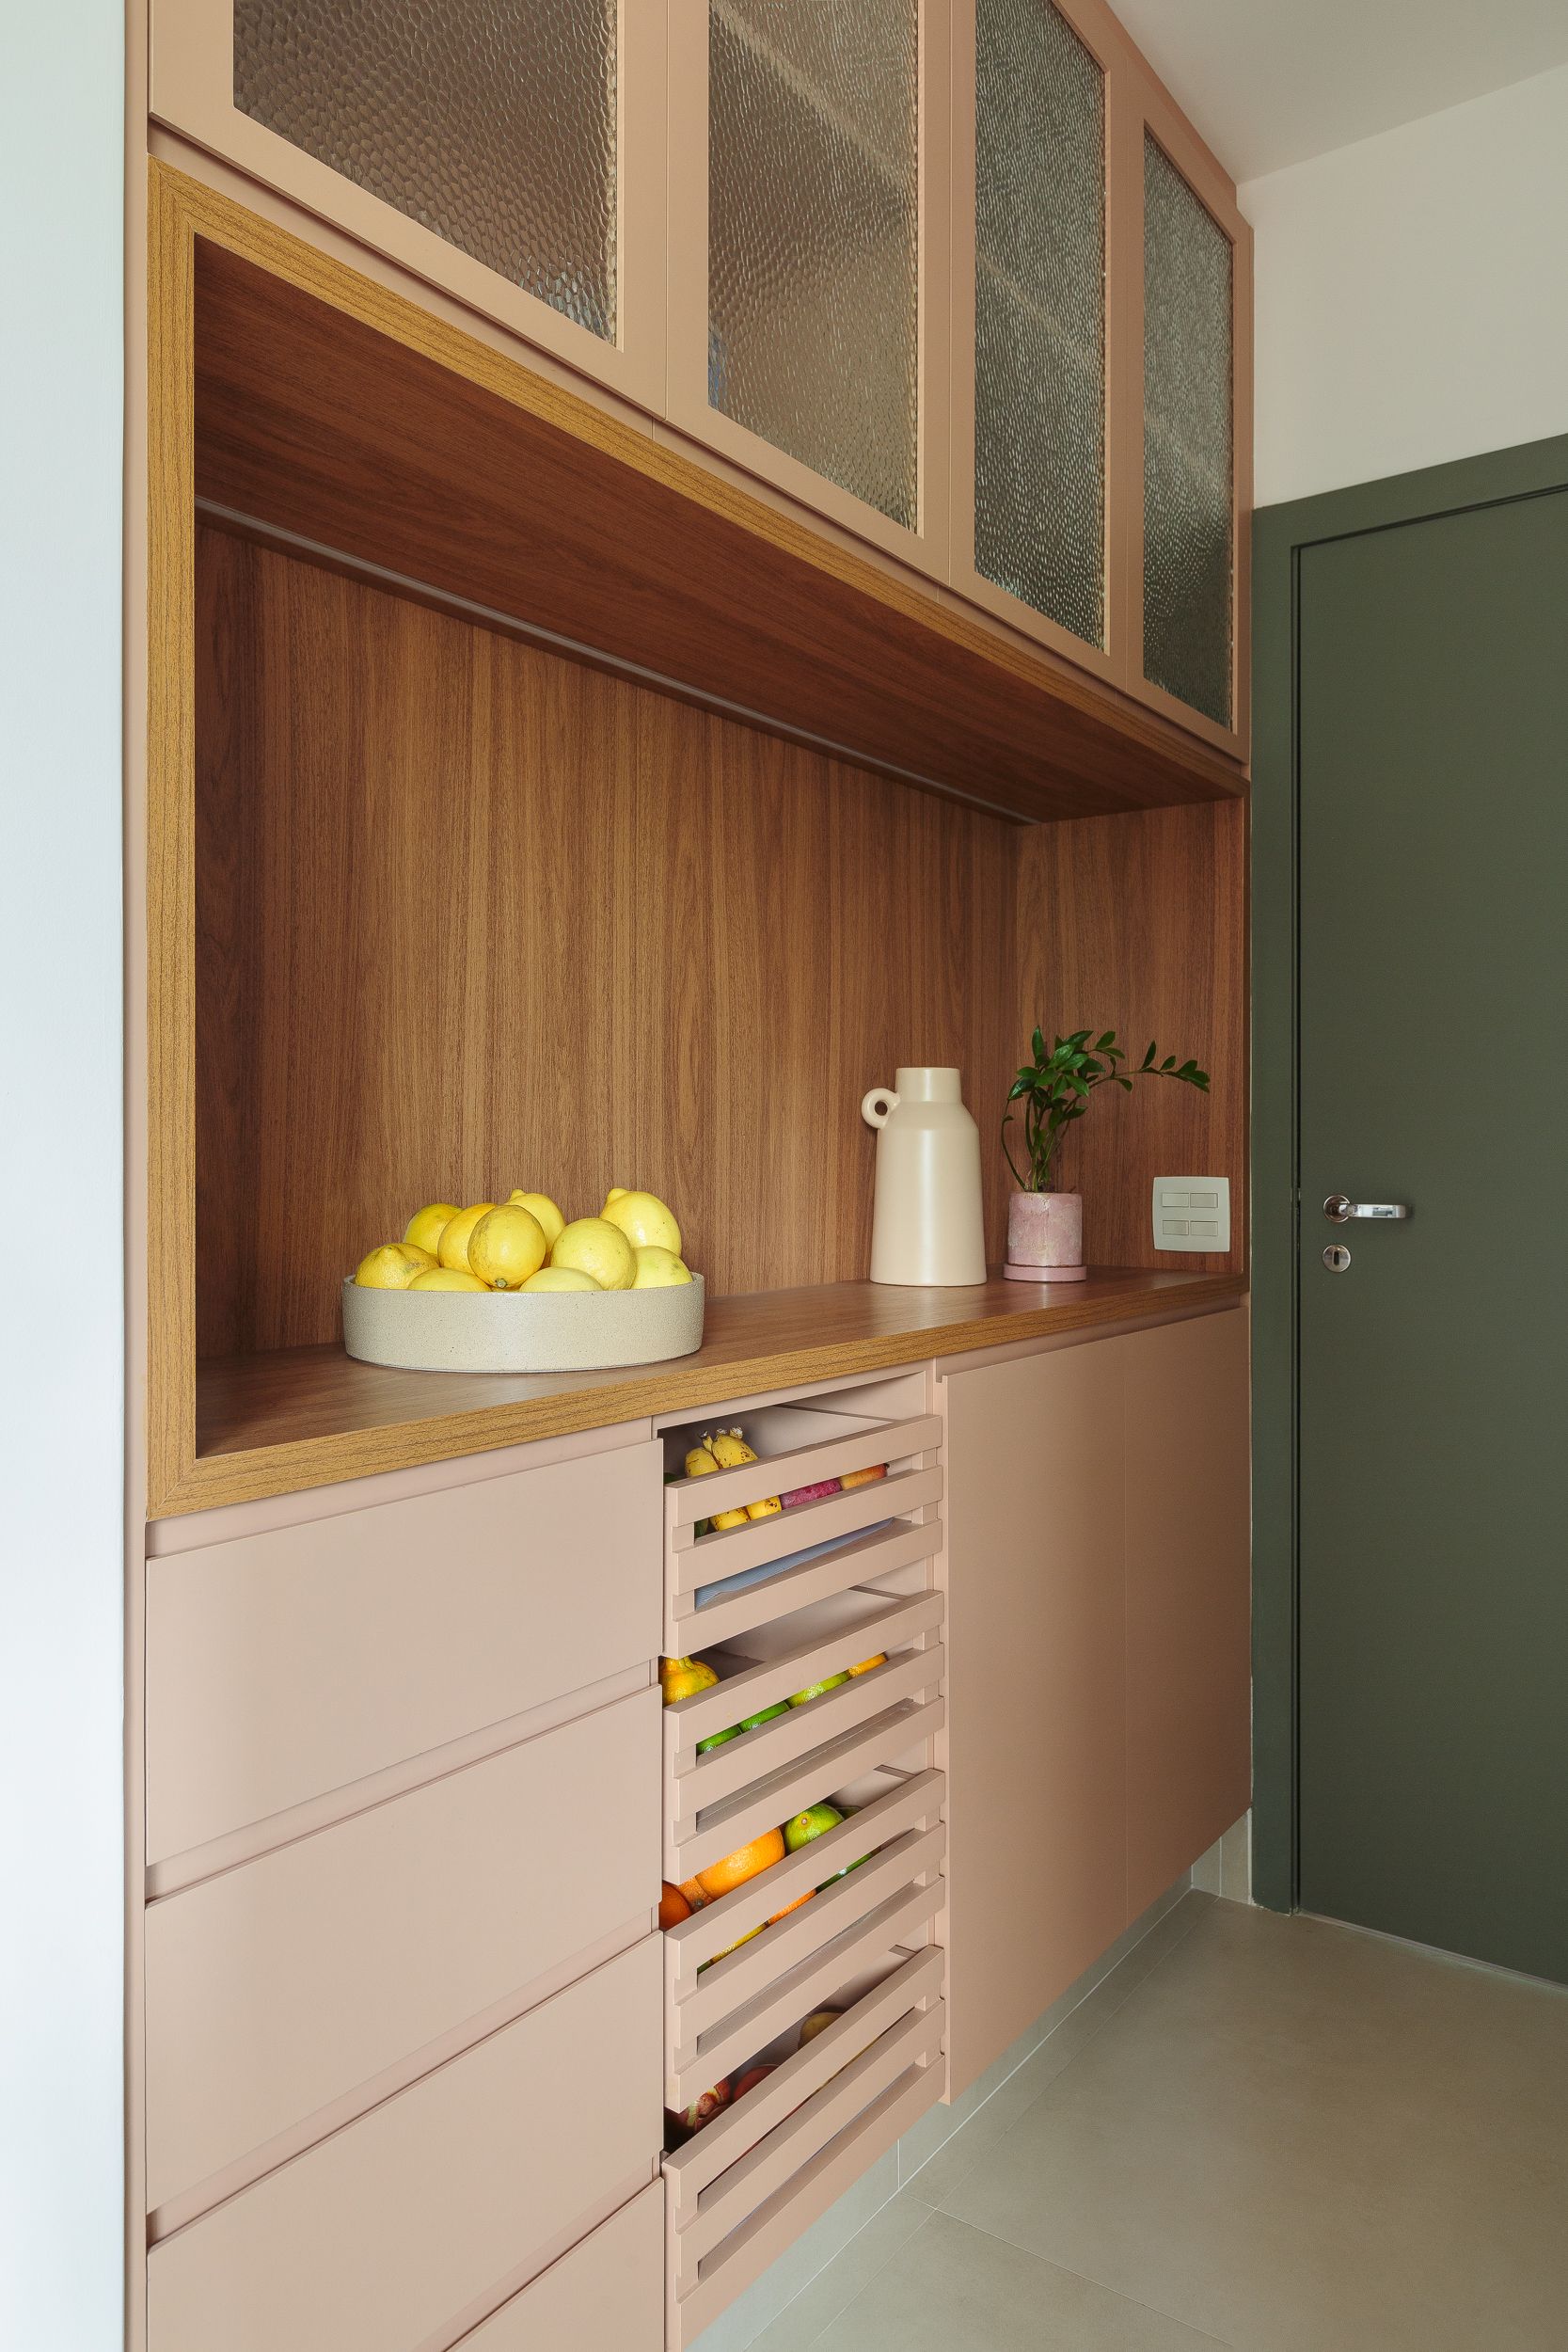 The Art of Kitchen Cabinet Design